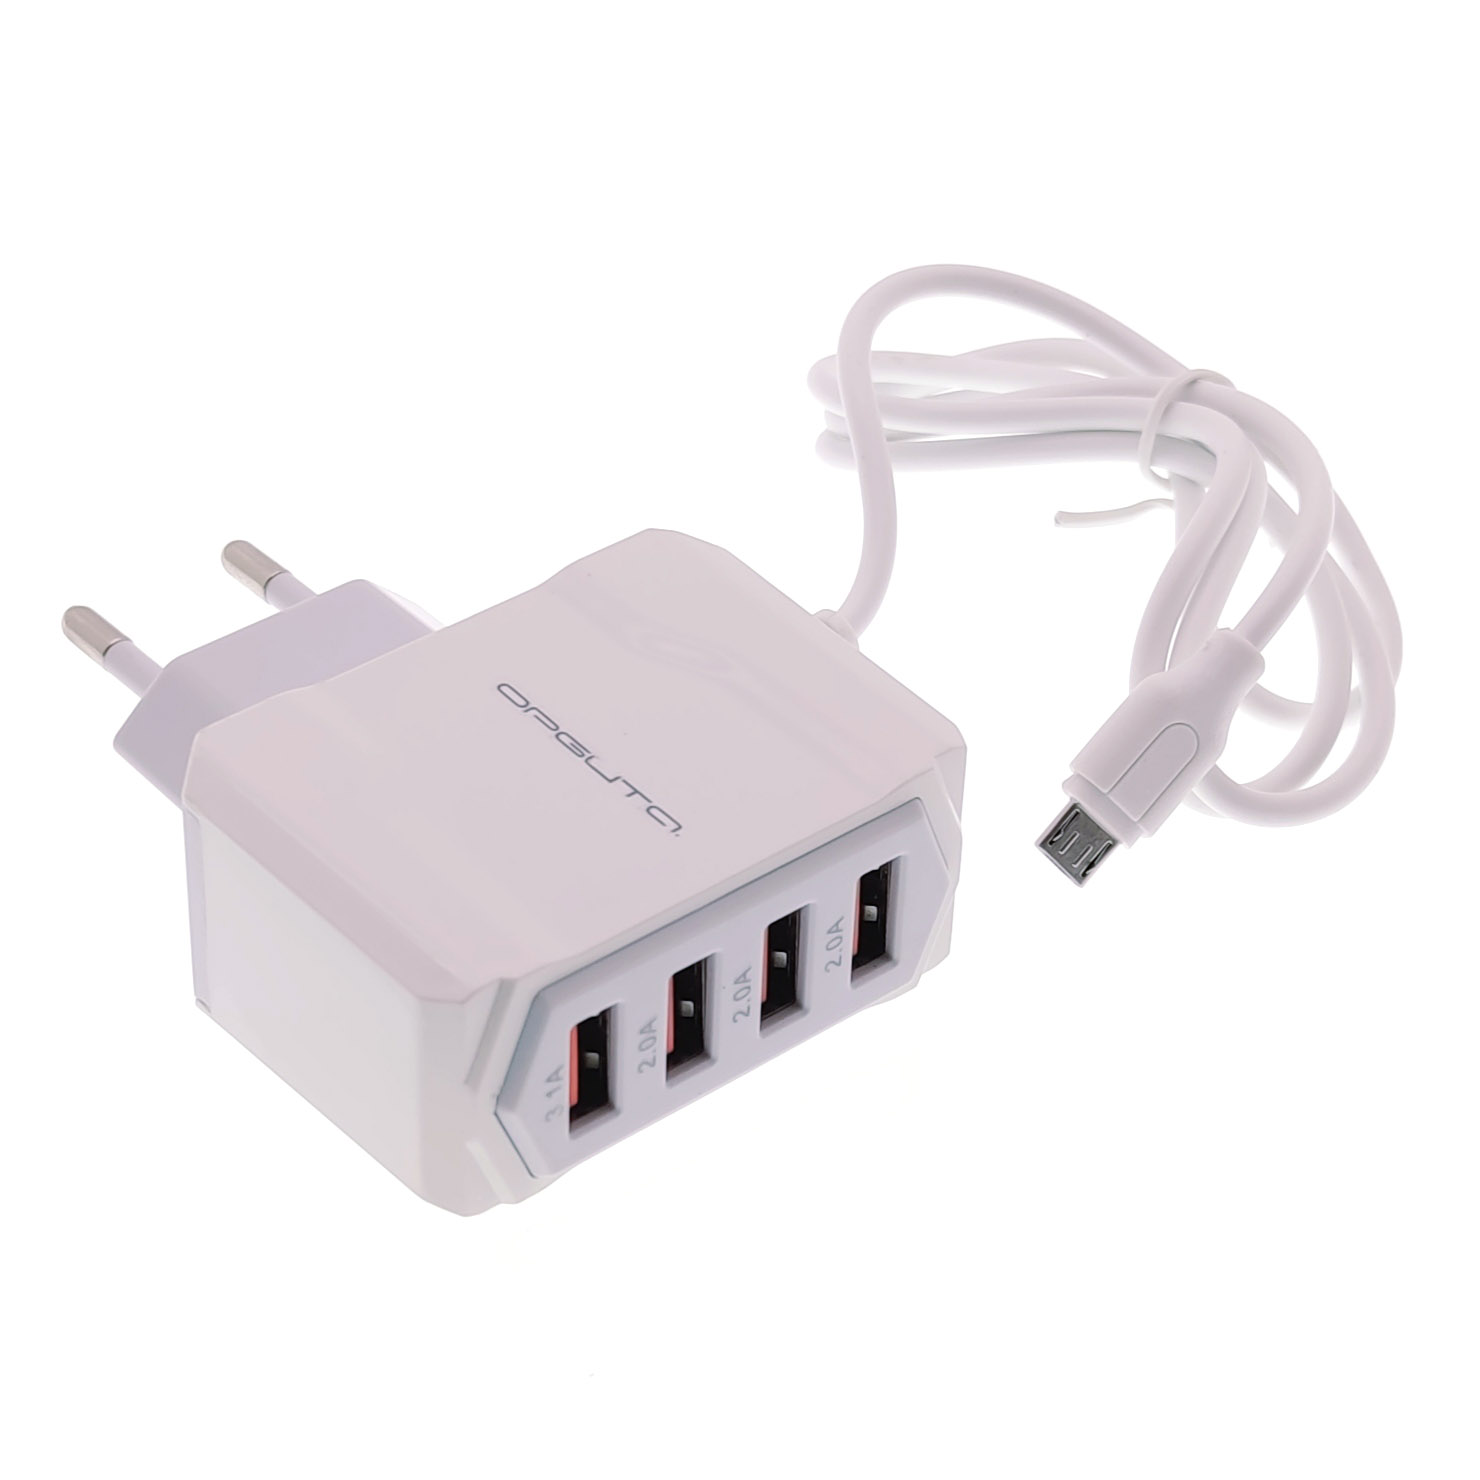 Блок пит USB сетевой  Орбита OT-APU49 белый кабель Micro USB (4*USB, 5В, 2,4A, 80см)